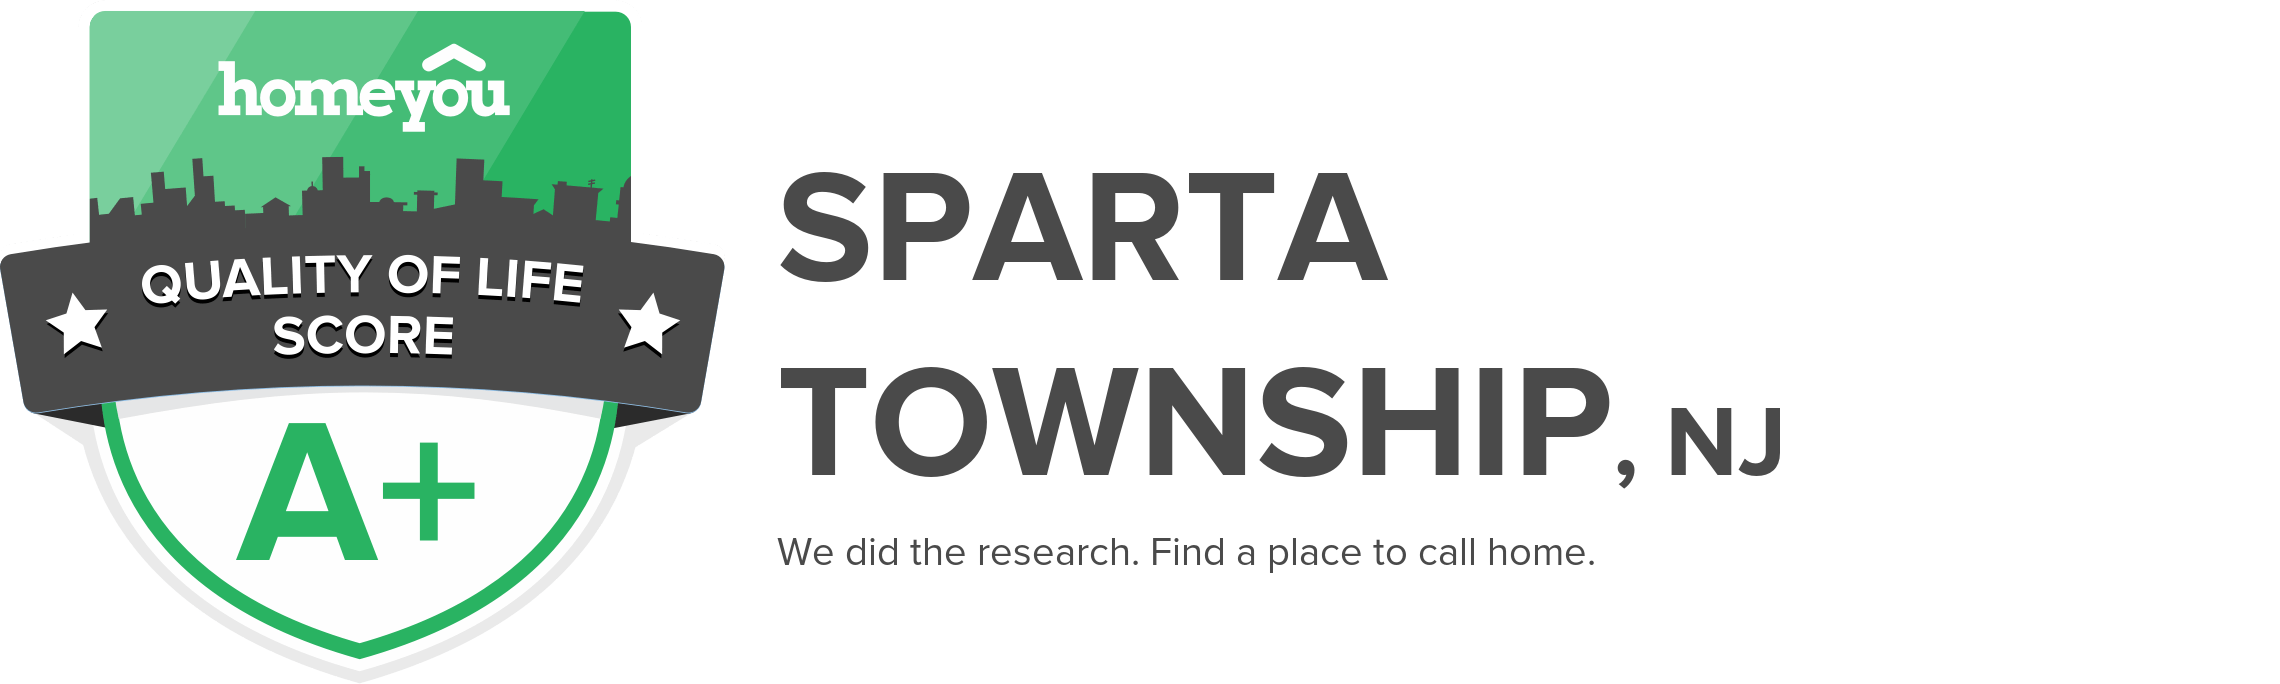 Sparta Township, NJ